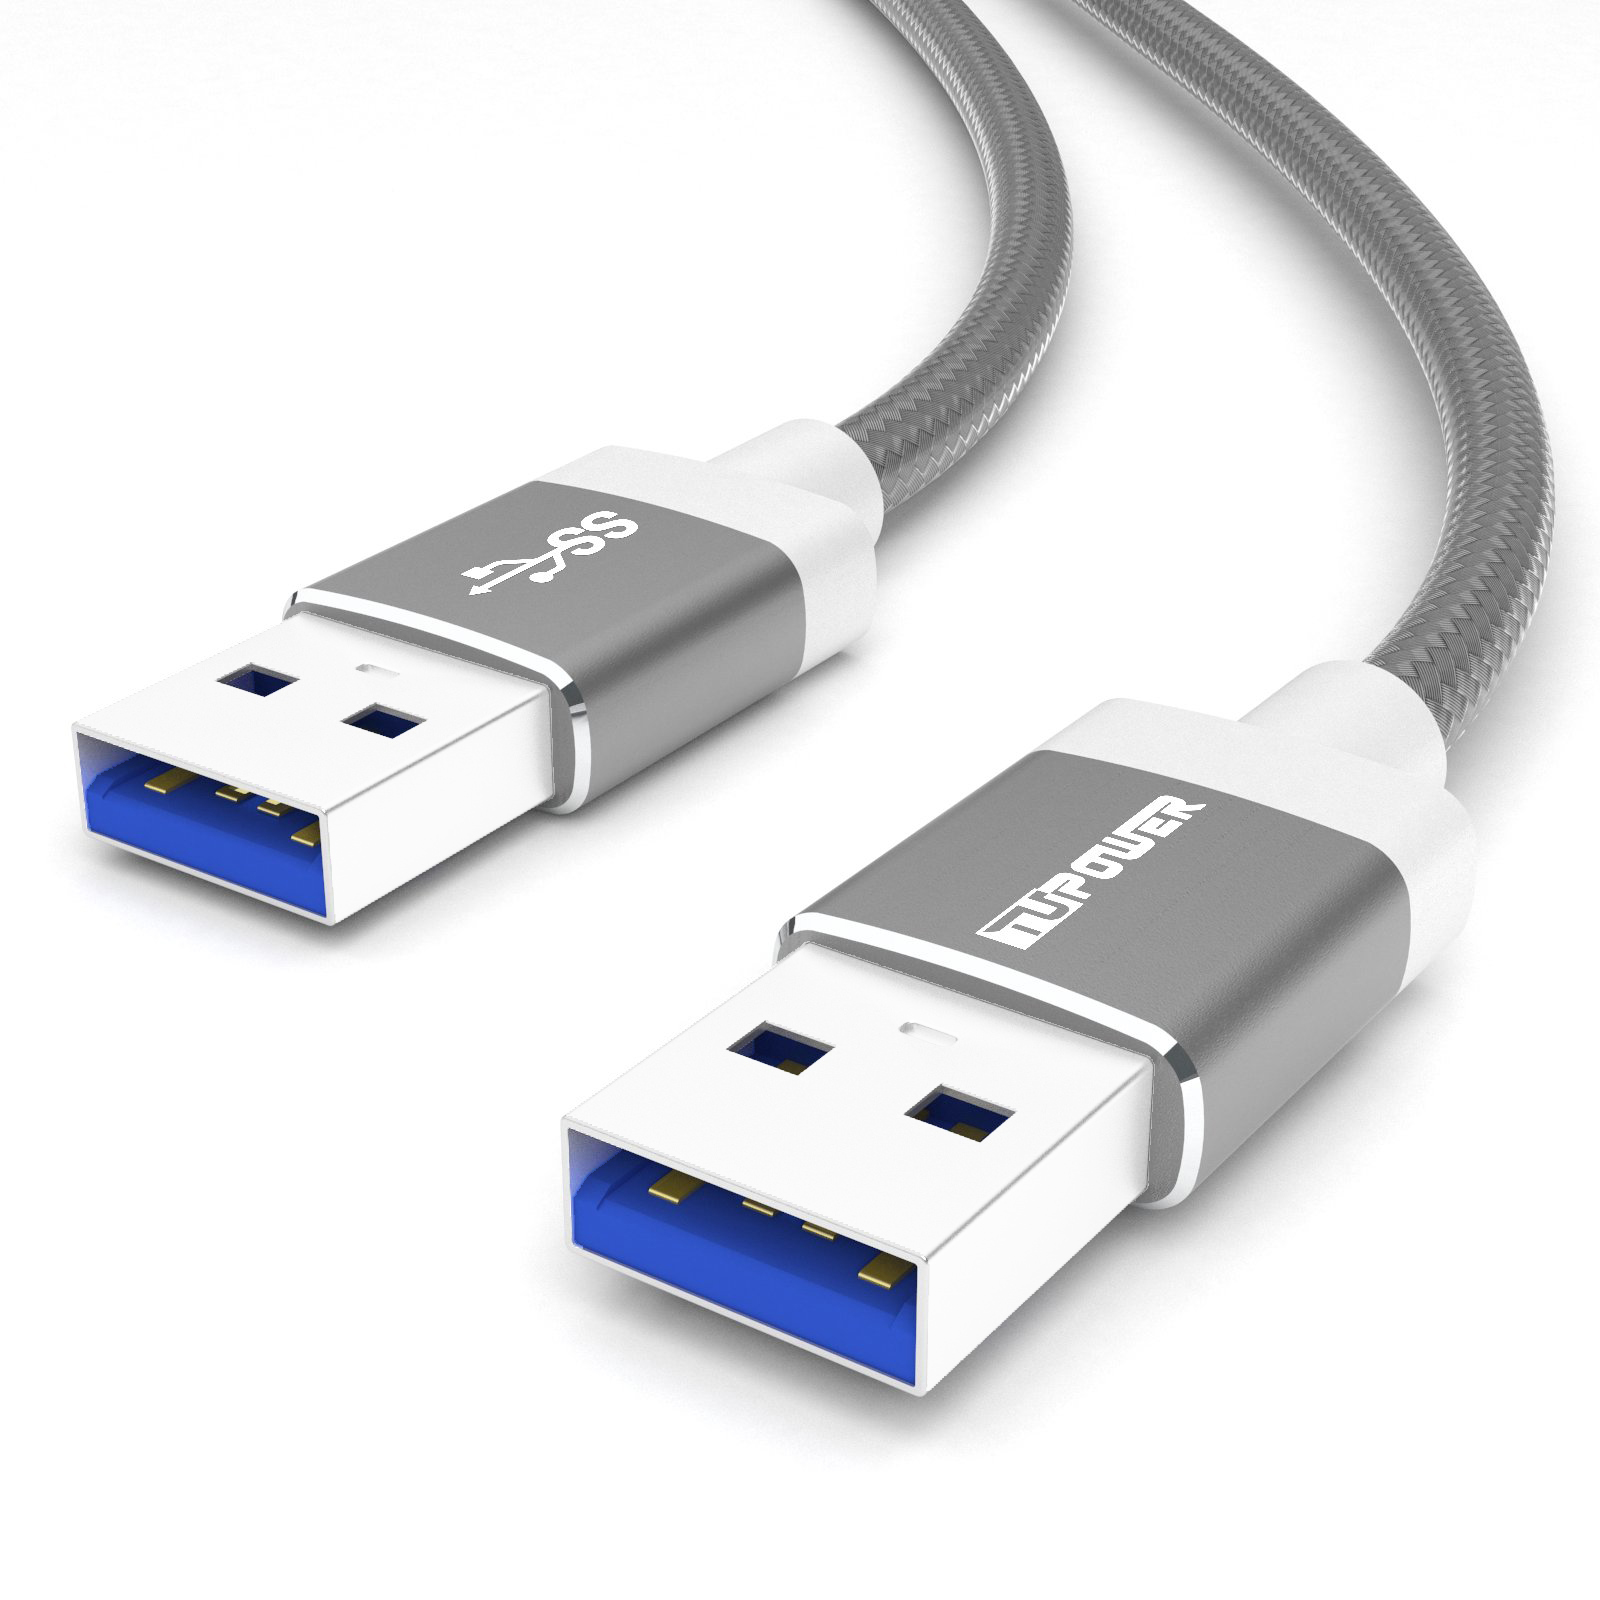 3.0 Verbindung USB K56 Verbindungskabel TUPOWER 1m Kabel USB